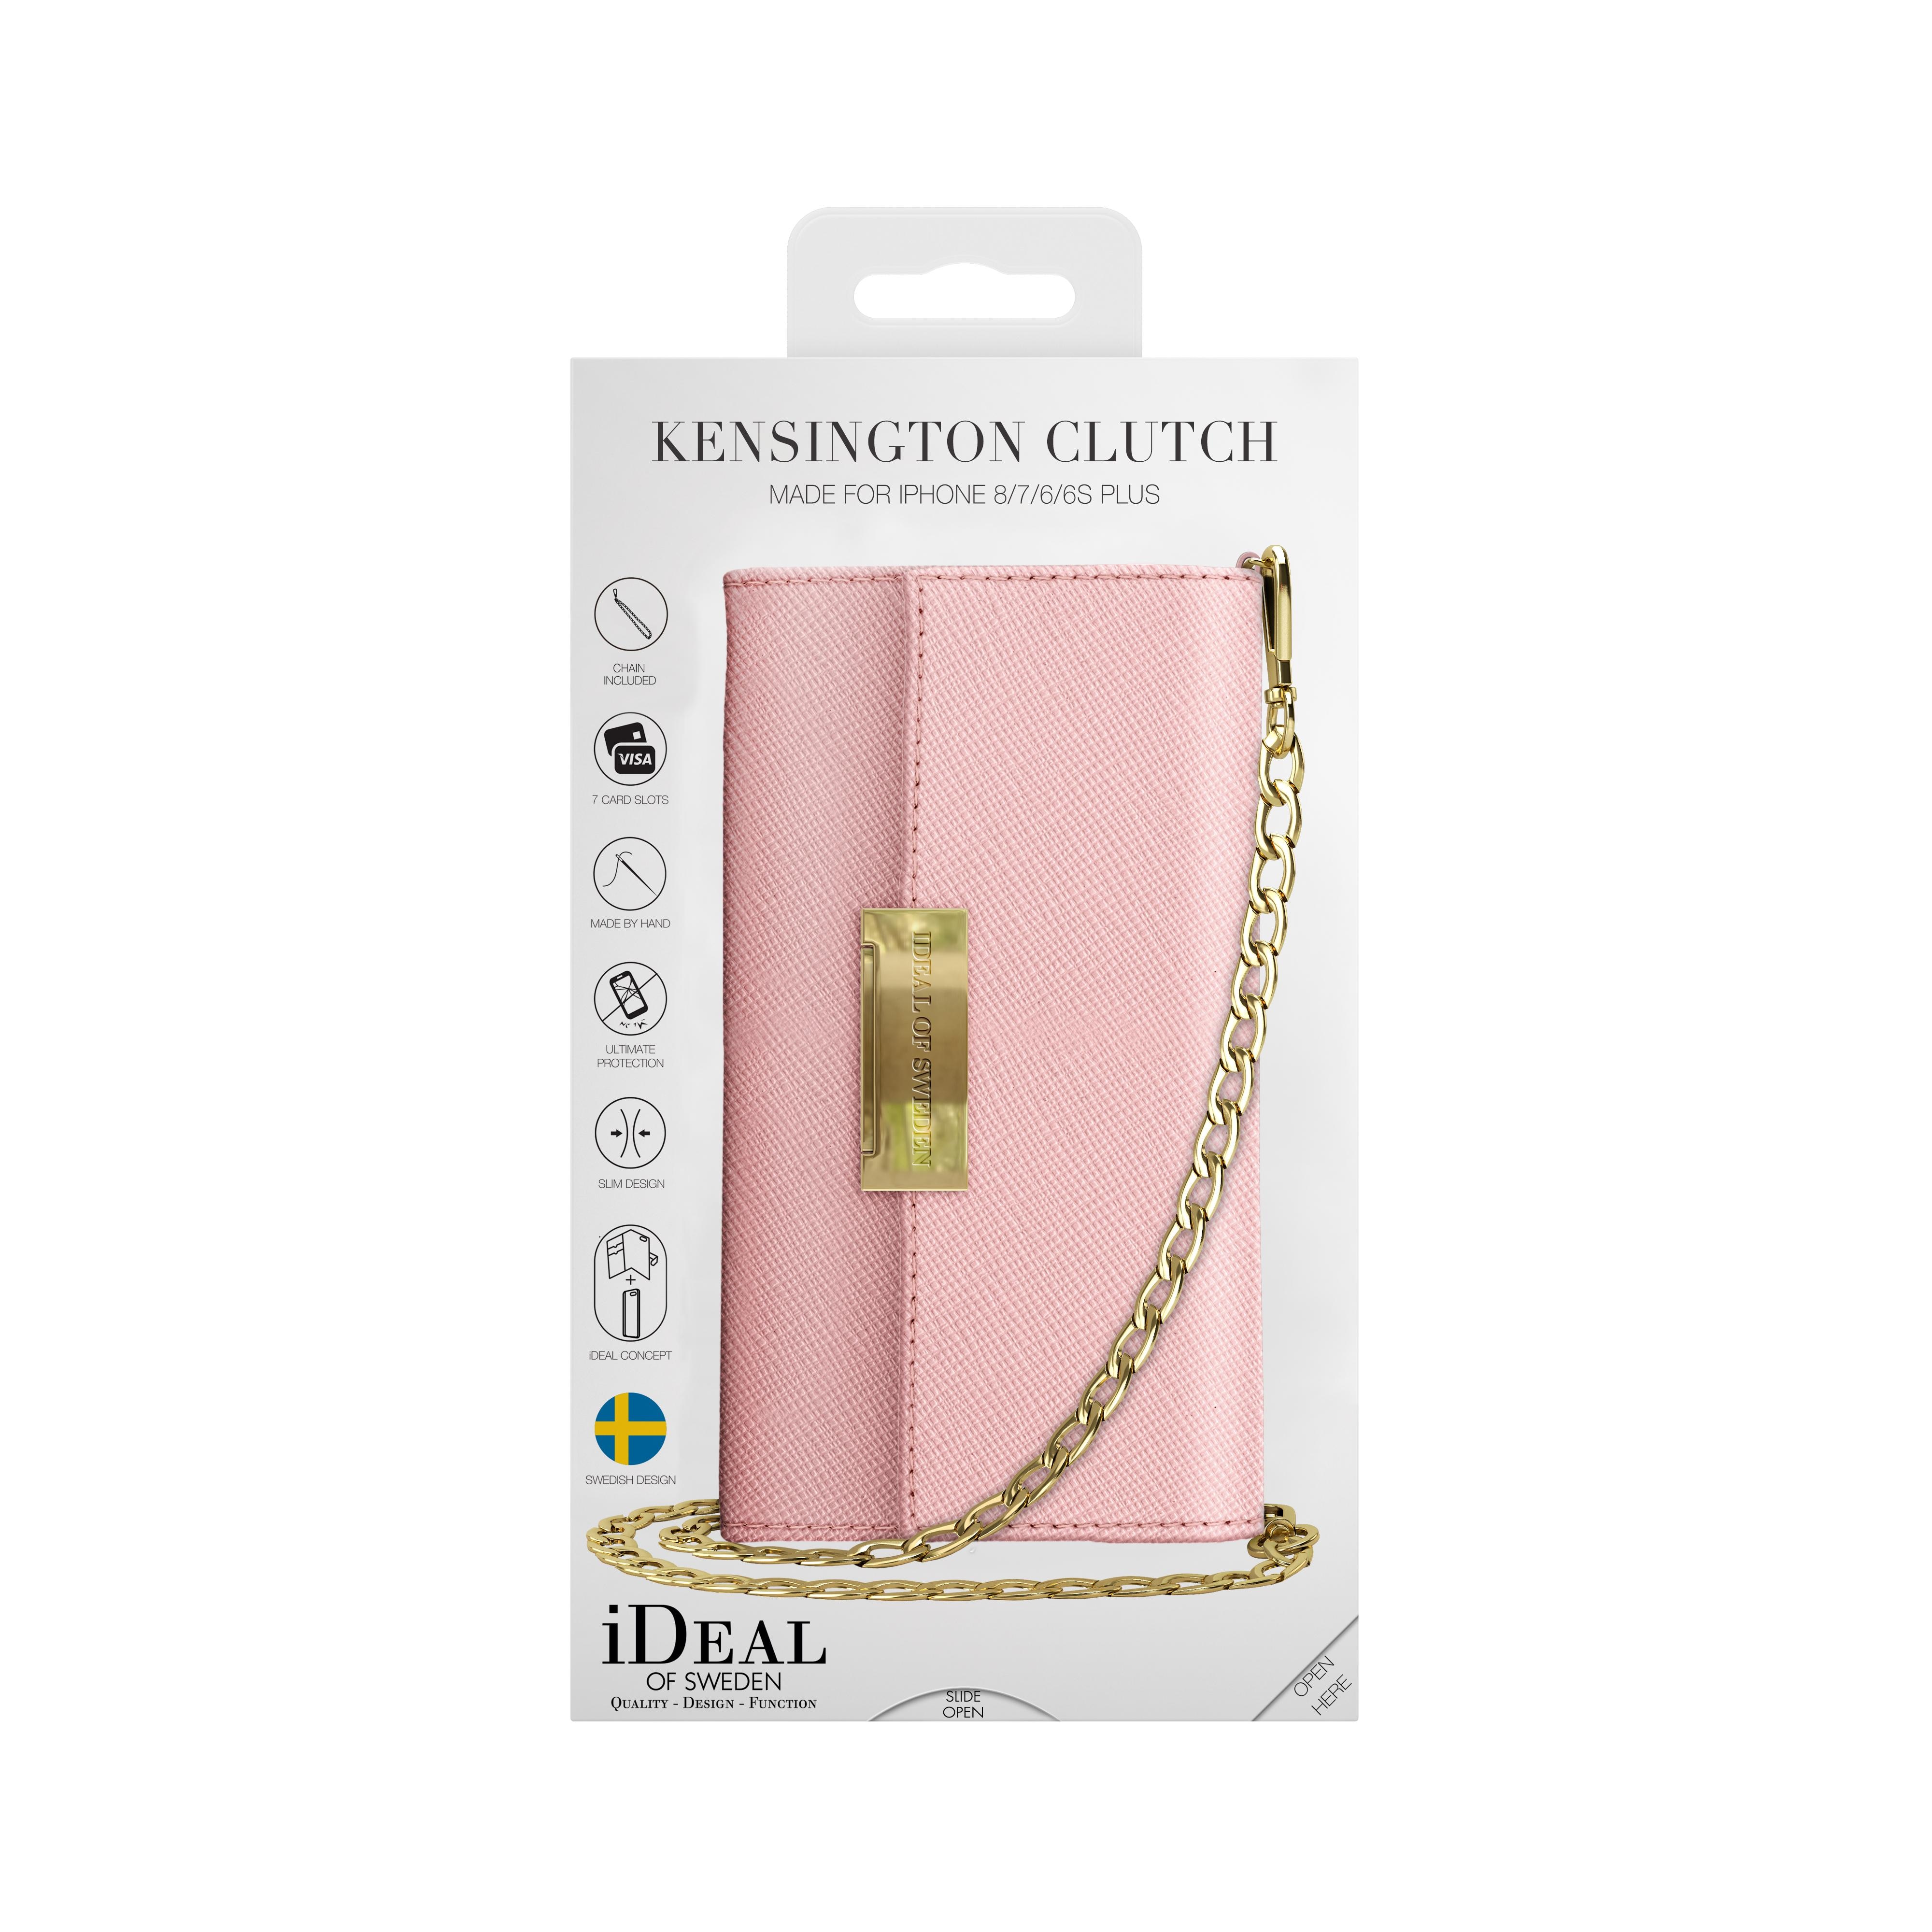 Kensington Clutch iPhone 7 Plus/8 Plus Pink